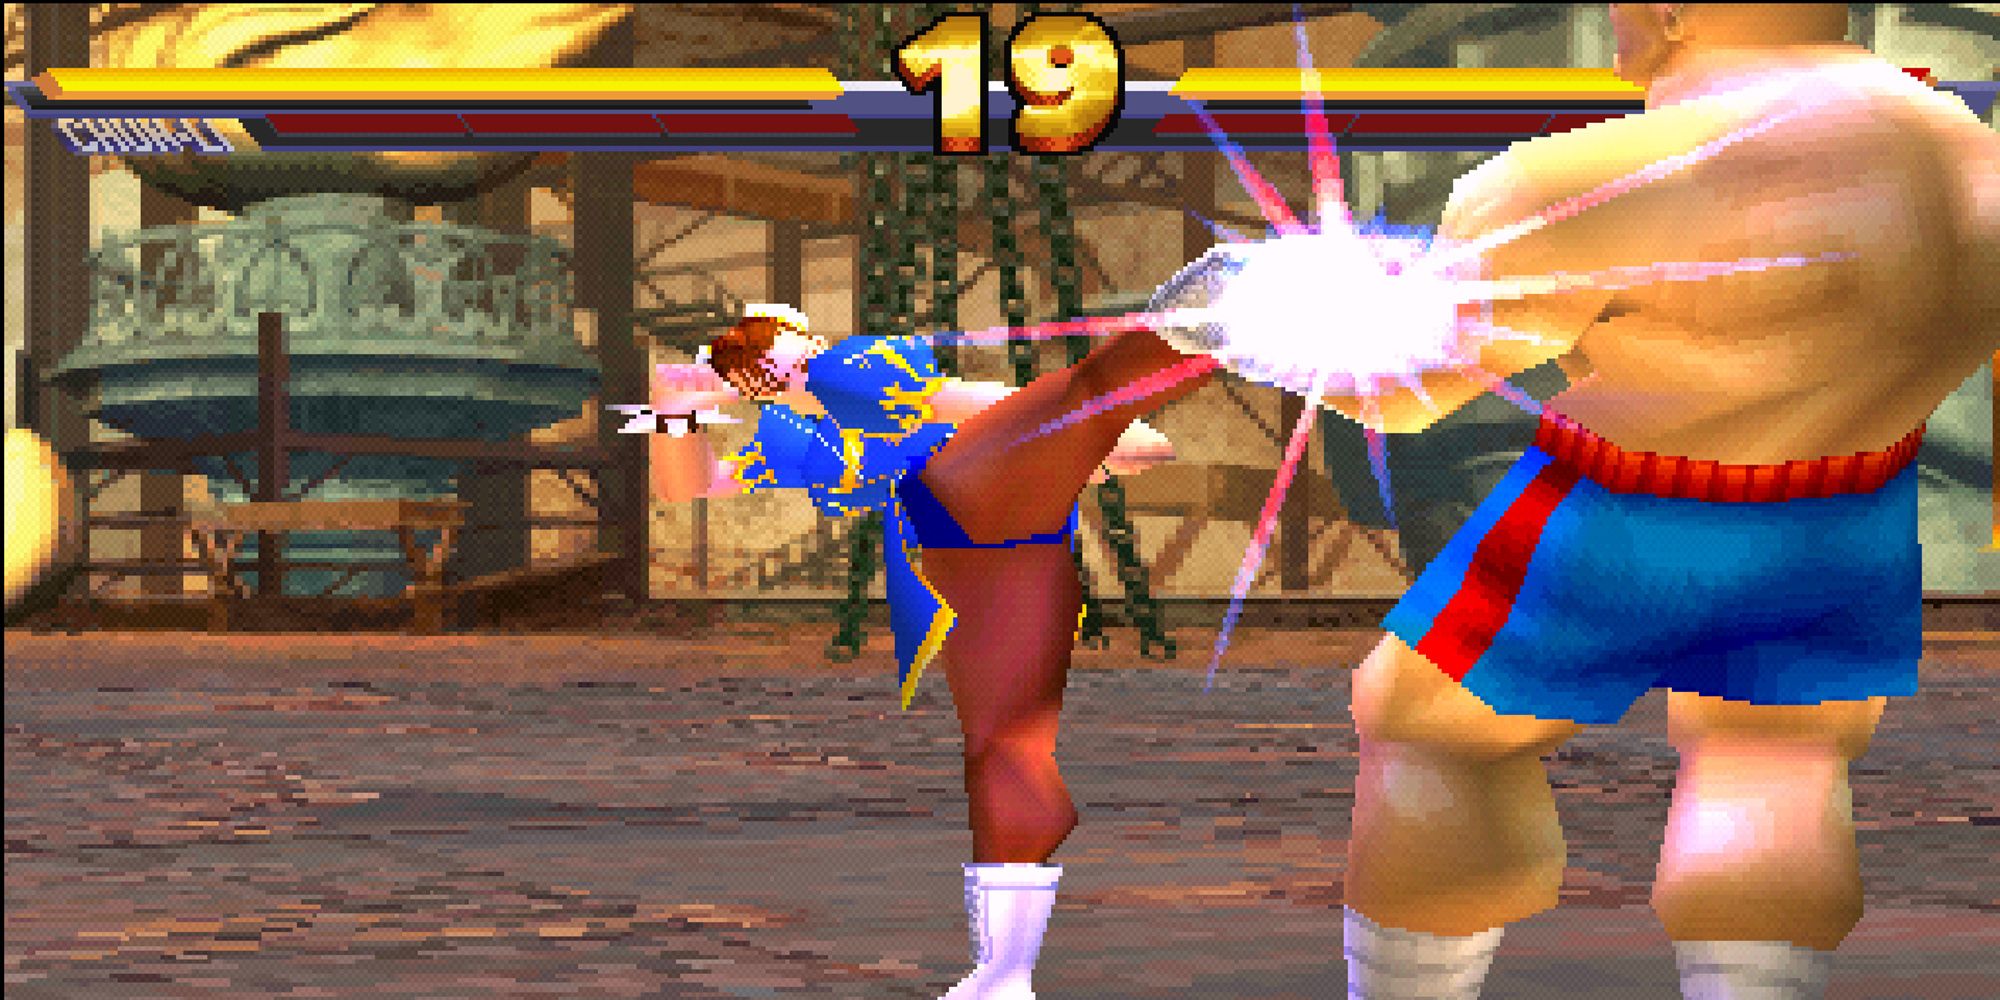 Chun-li kicks Sagat in the face on a scaffolding facing the Statue of Liberty in Street Fighter EX2 Plus.